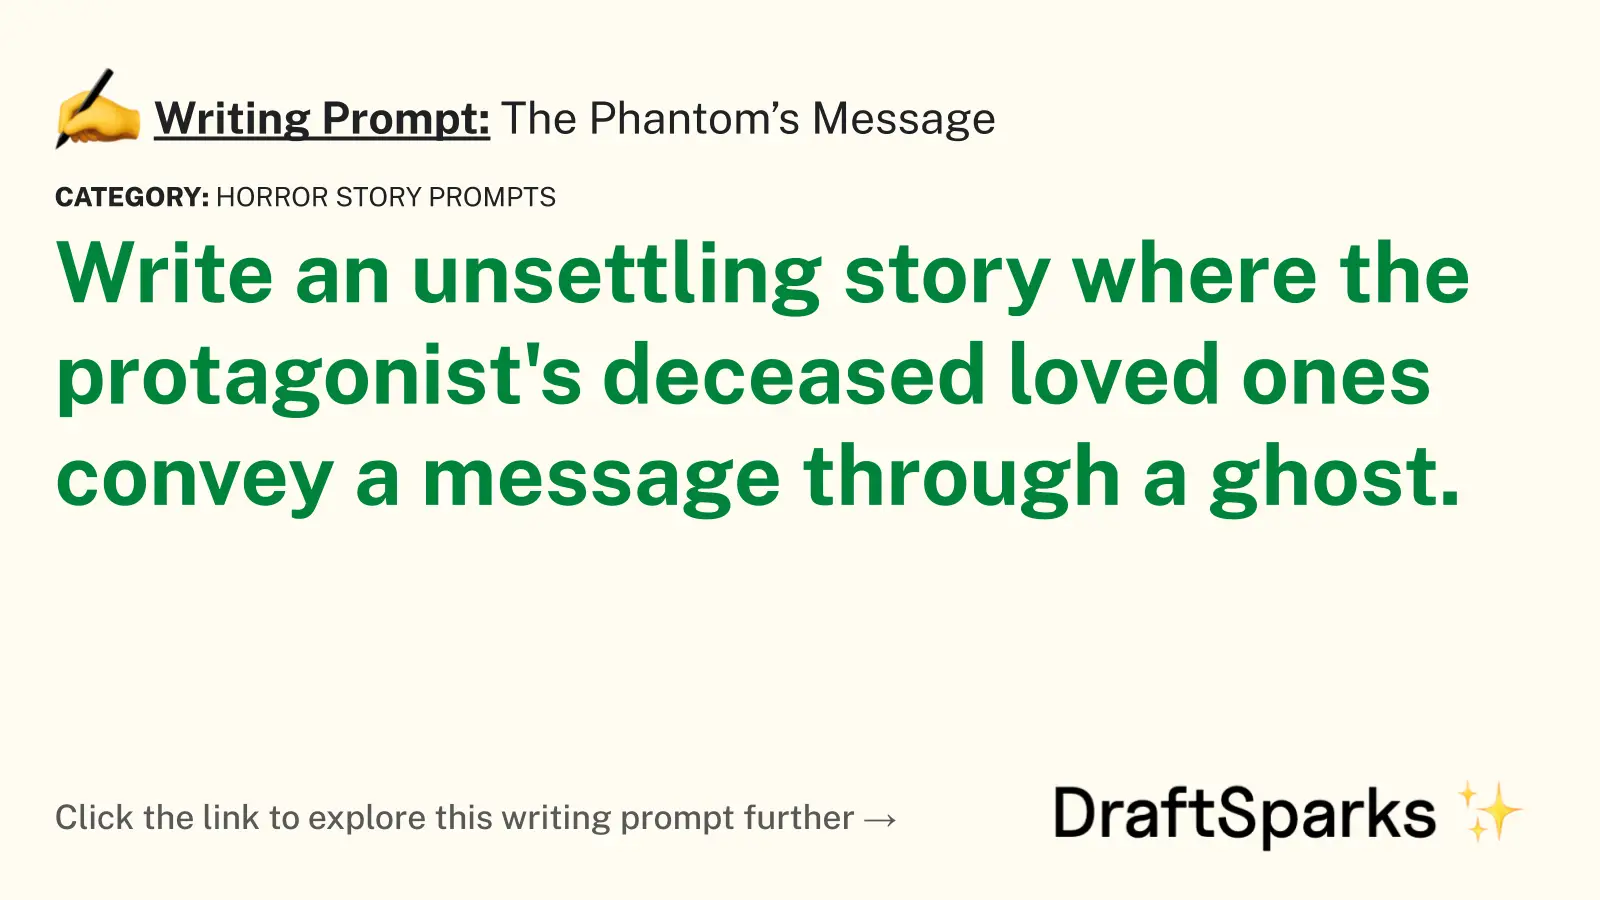 The Phantom’s Message